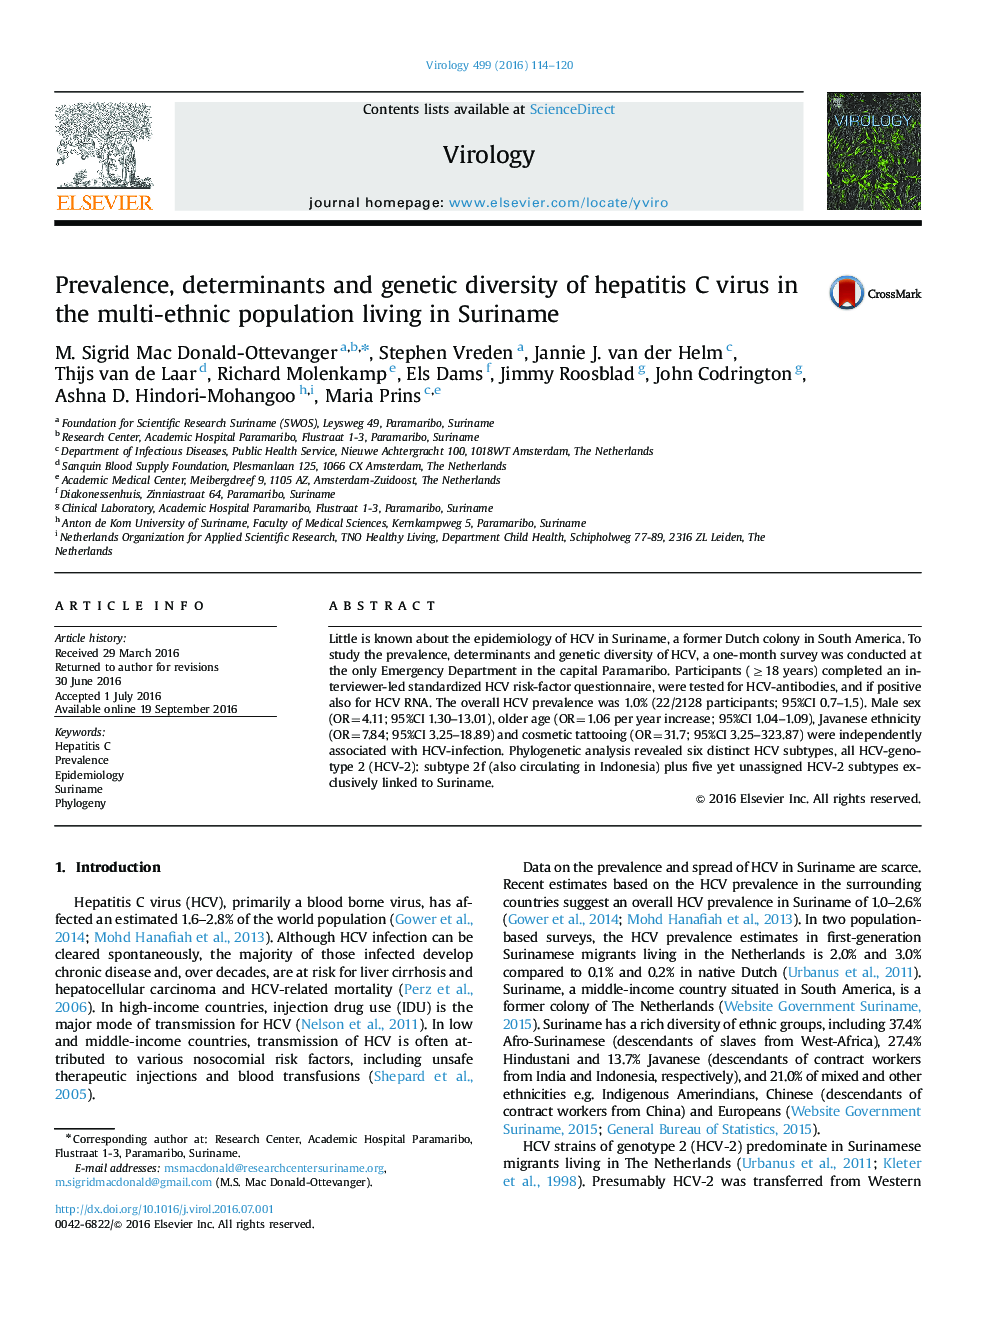 Prevalence, determinants and genetic diversity of hepatitis C virus in the multi-ethnic population living in Suriname